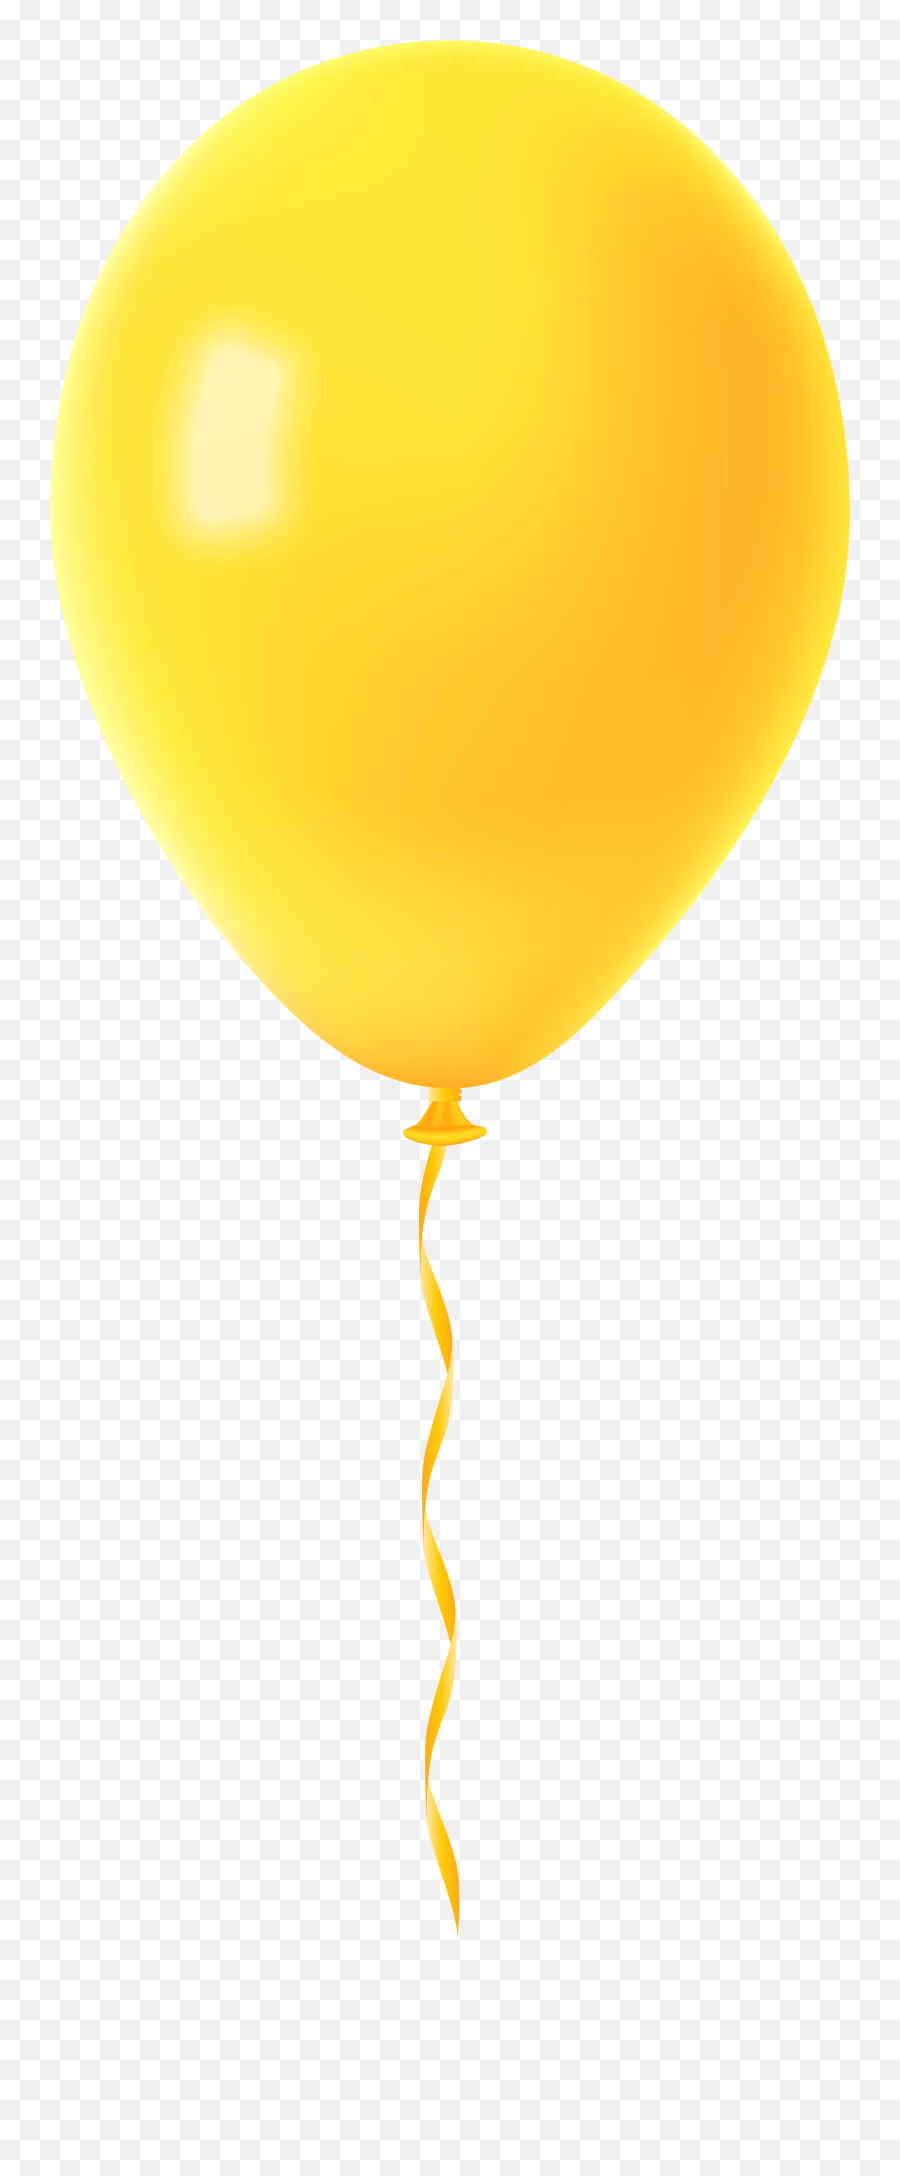 Portable Network Graphics - Yellow Balloon Png Clipart Emoji,Black Balloon Emoji